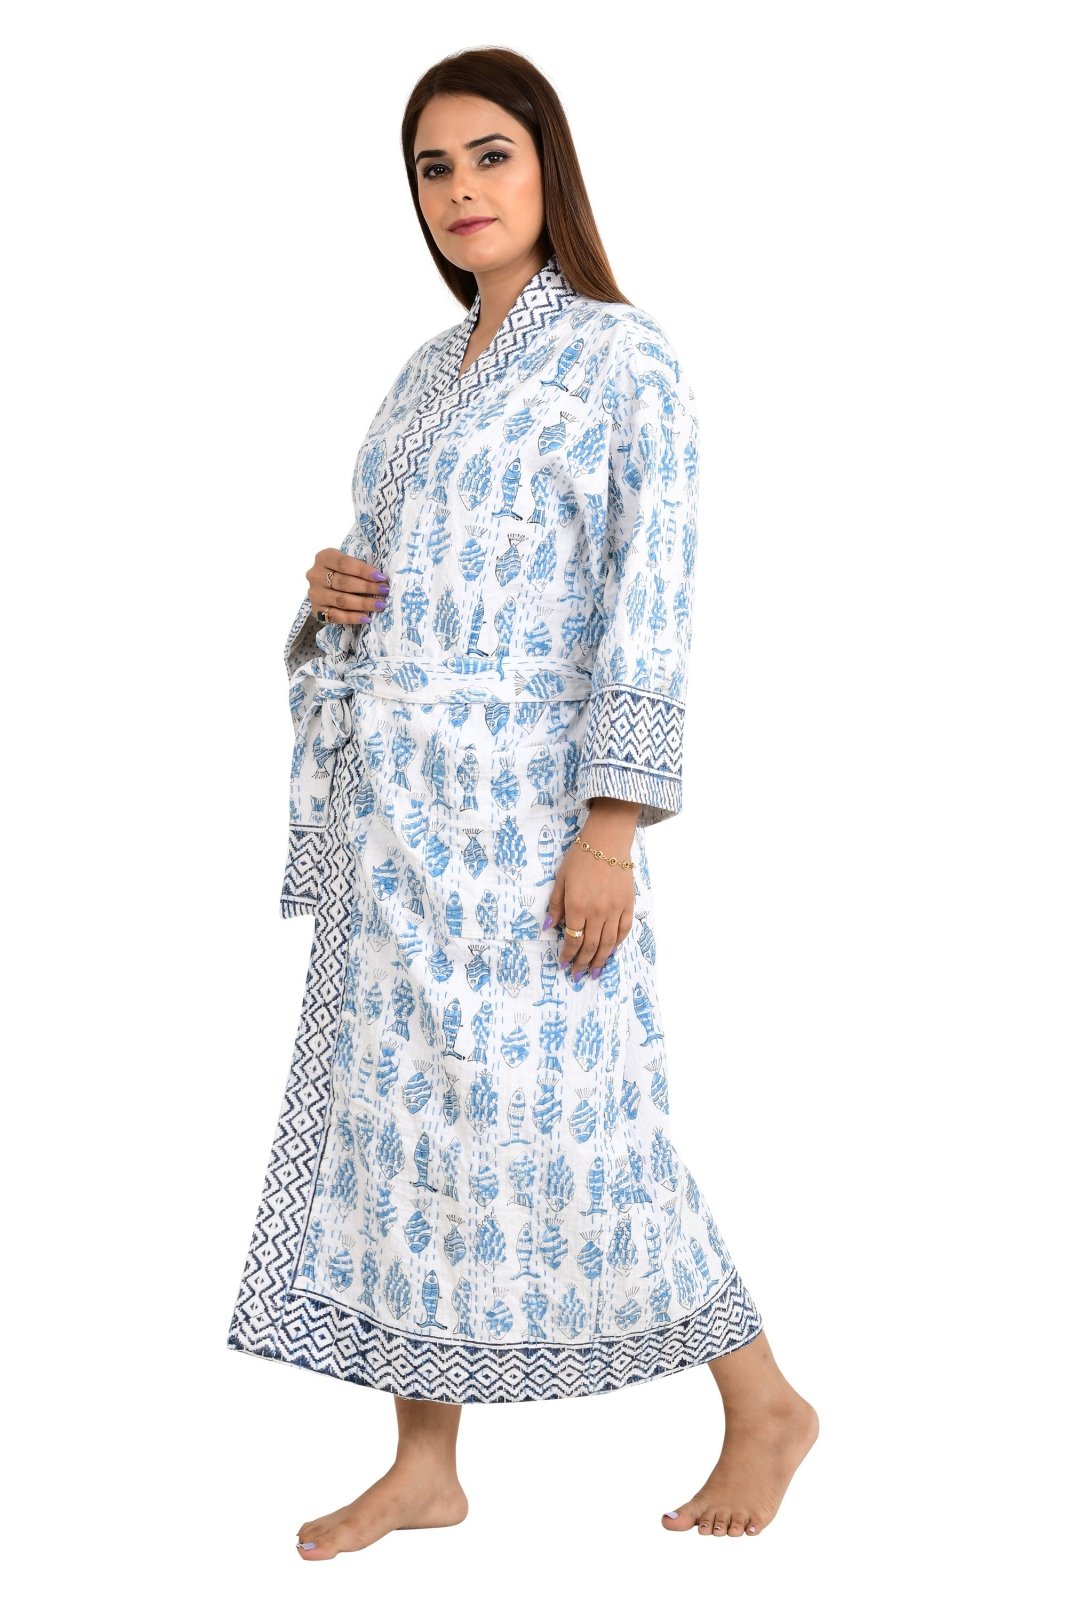 Kantha Stitch 100% Cotton Reversible Long Kimono Women Jacket | Handmade Stitch Robe | Unisex Gift | White Blue Fish Print - The Eastern Loom